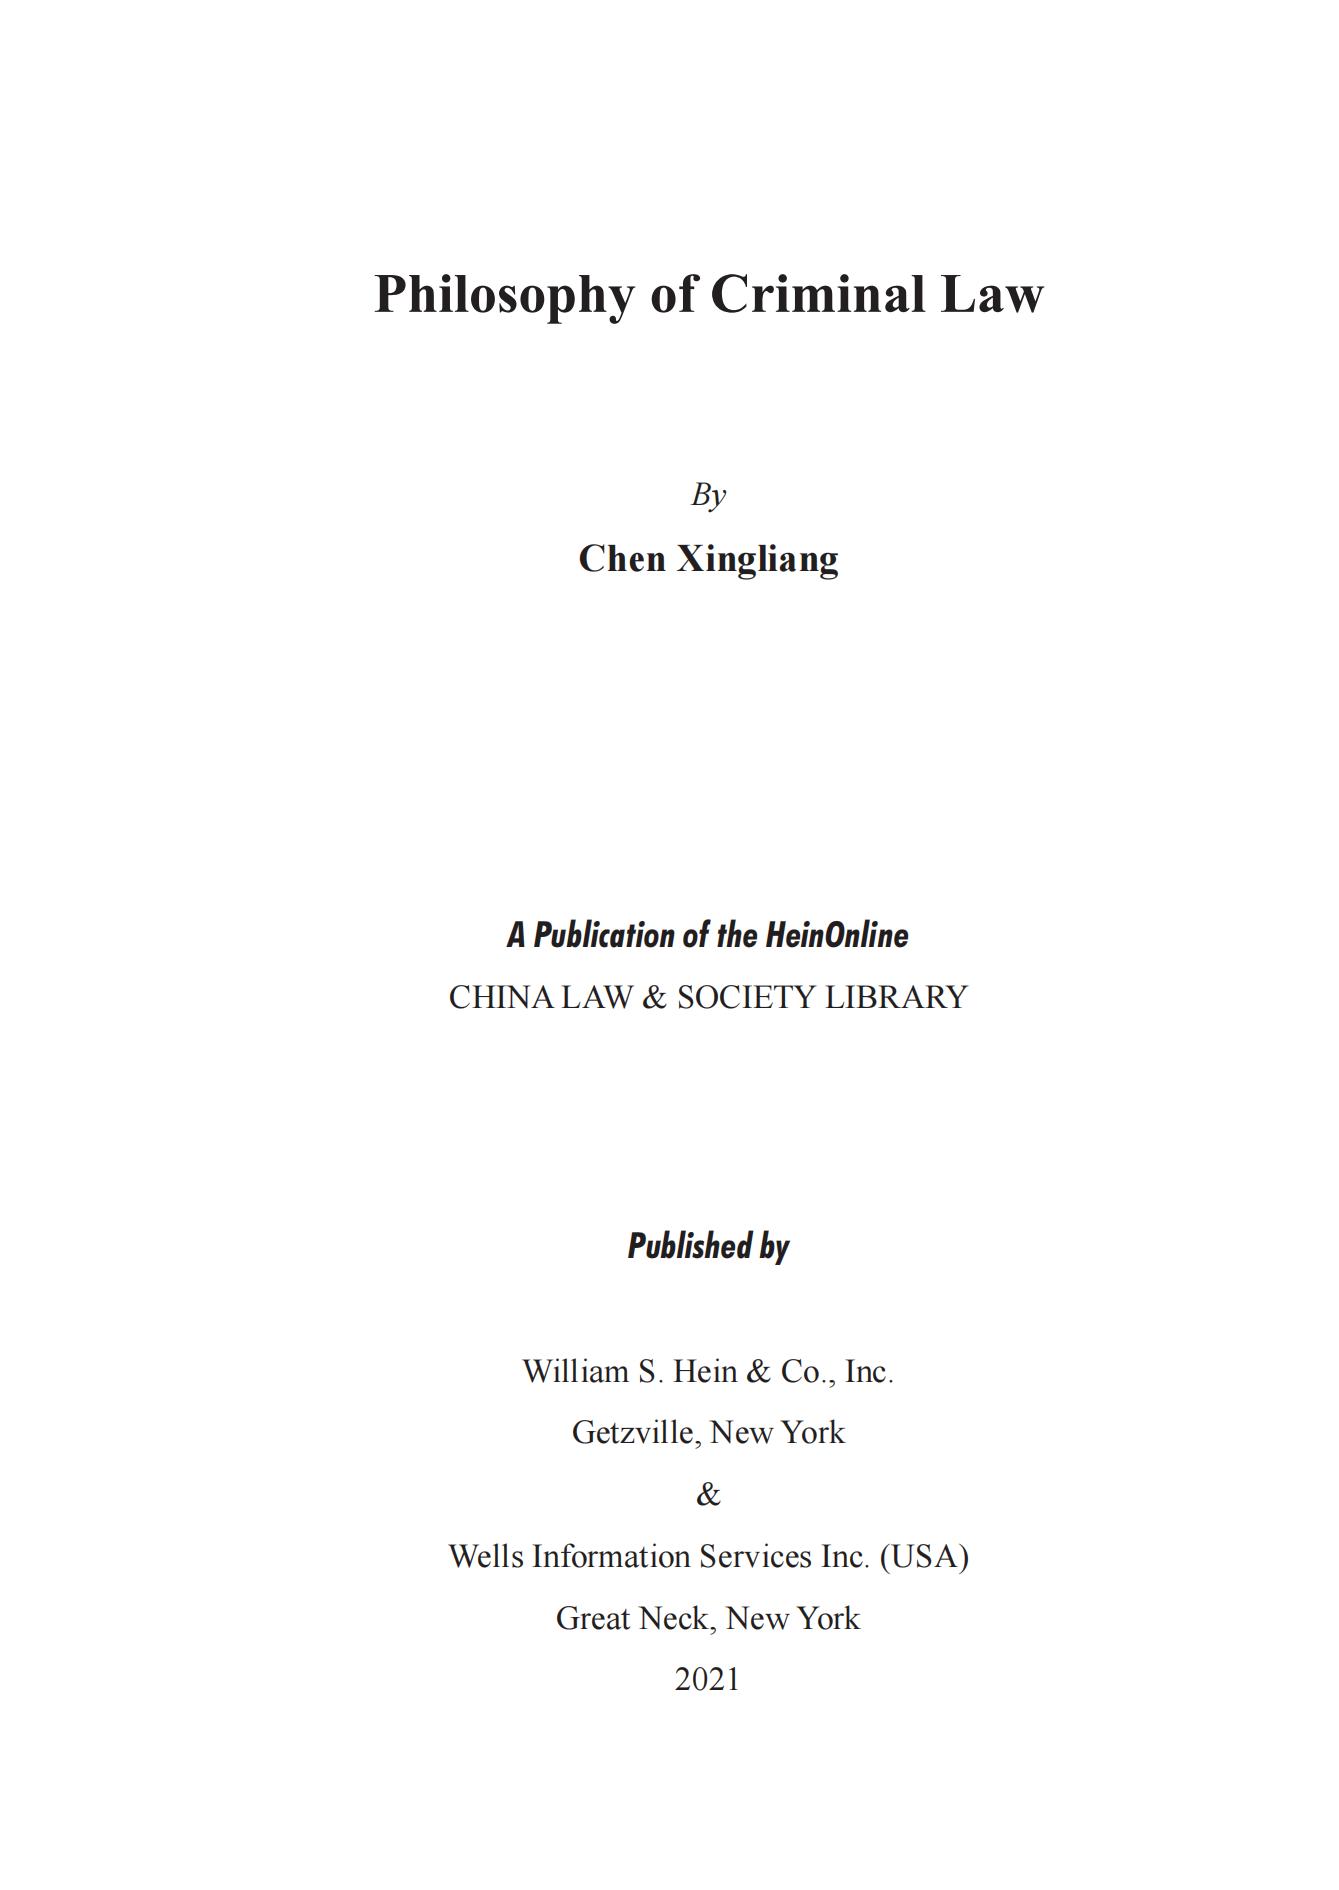 Philosophy of Criminal Law_02.jpg